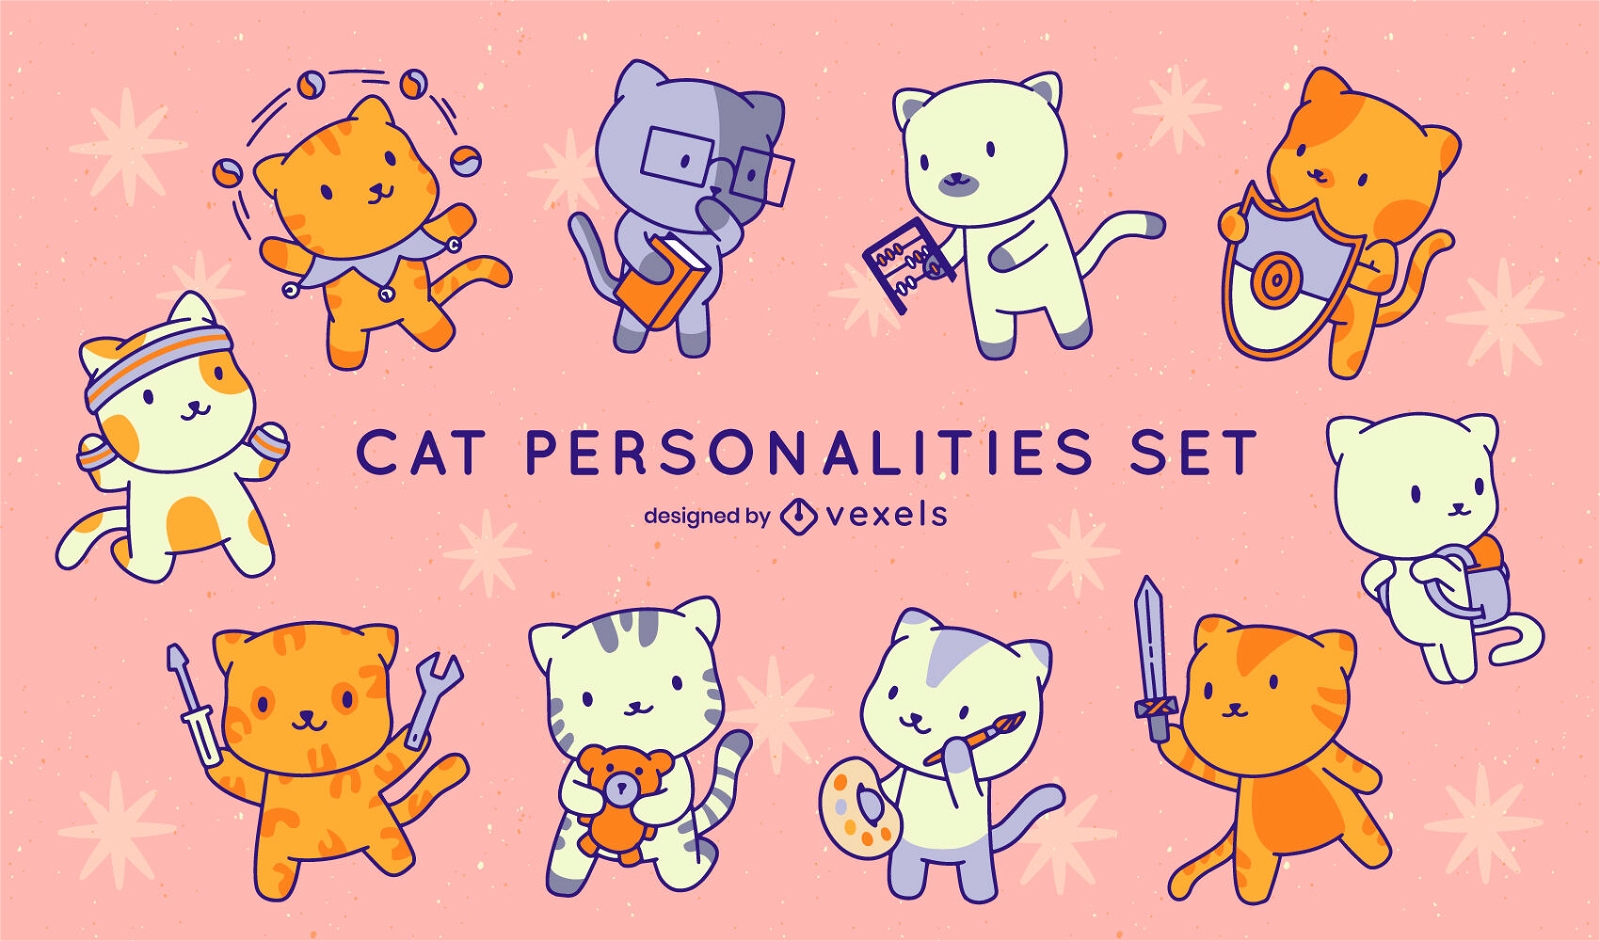 Cat personalities characters set 